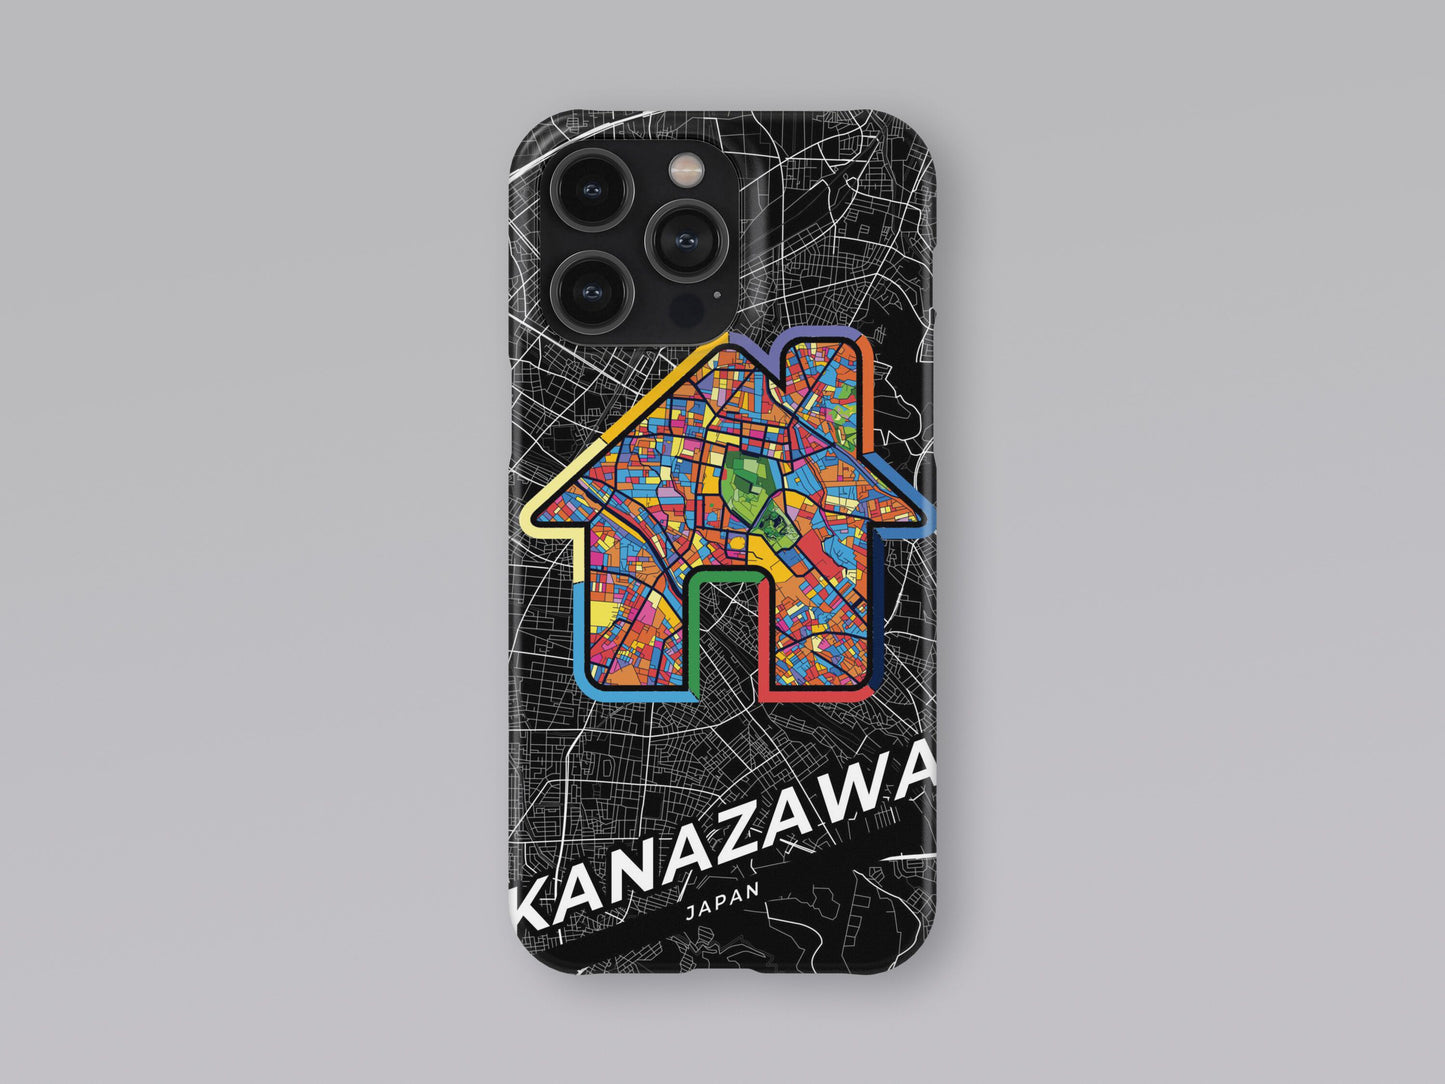 Kanazawa Japan slim phone case with colorful icon. Birthday, wedding or housewarming gift. Couple match cases. 3